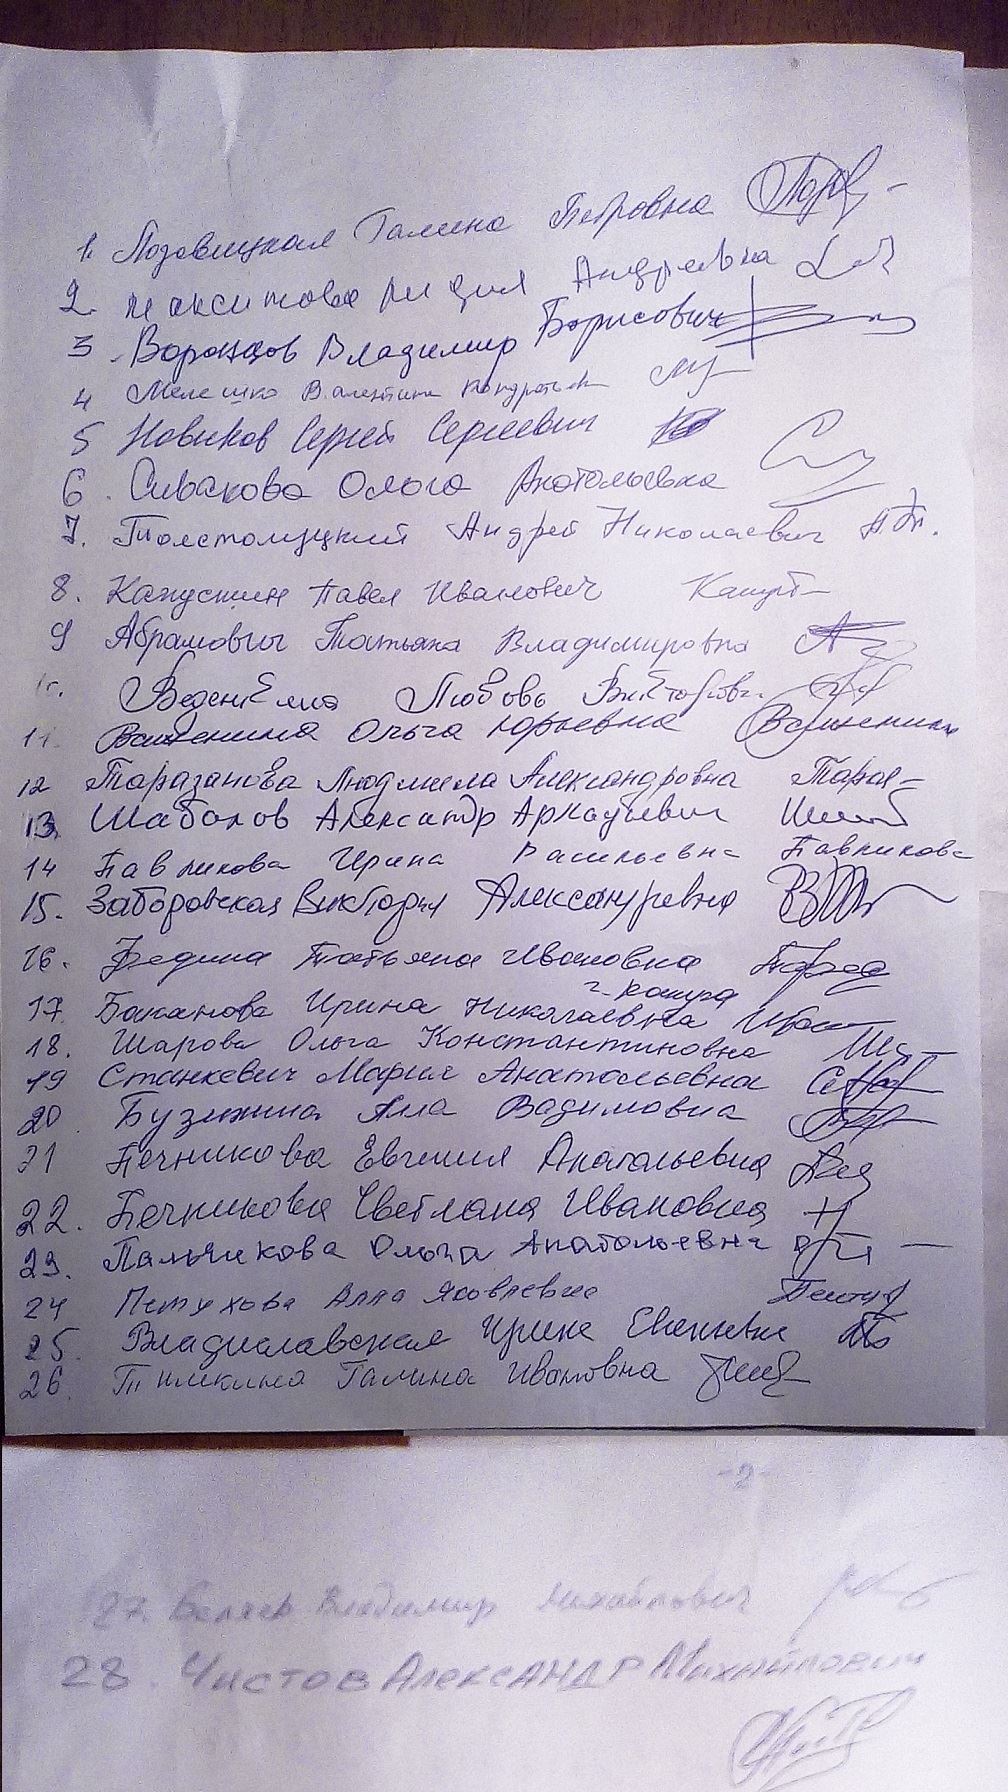 Podpisy pod rezolucją 9.12.2017 Moskwa